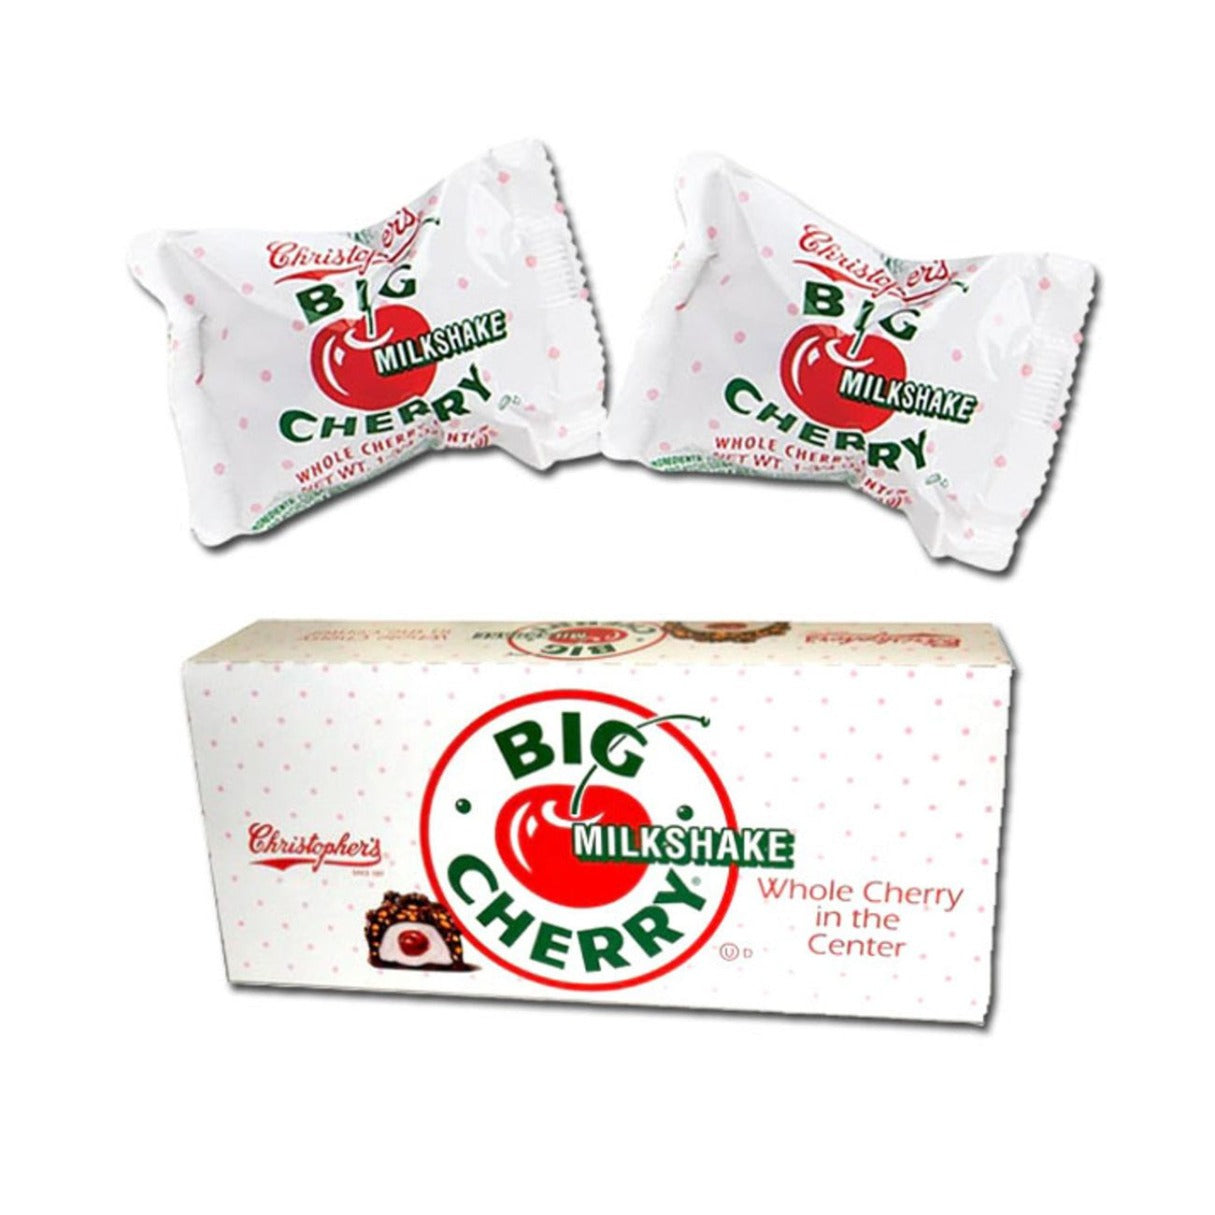 Big Cherry Milkshake Candy Bars 1.75oz - 24ct